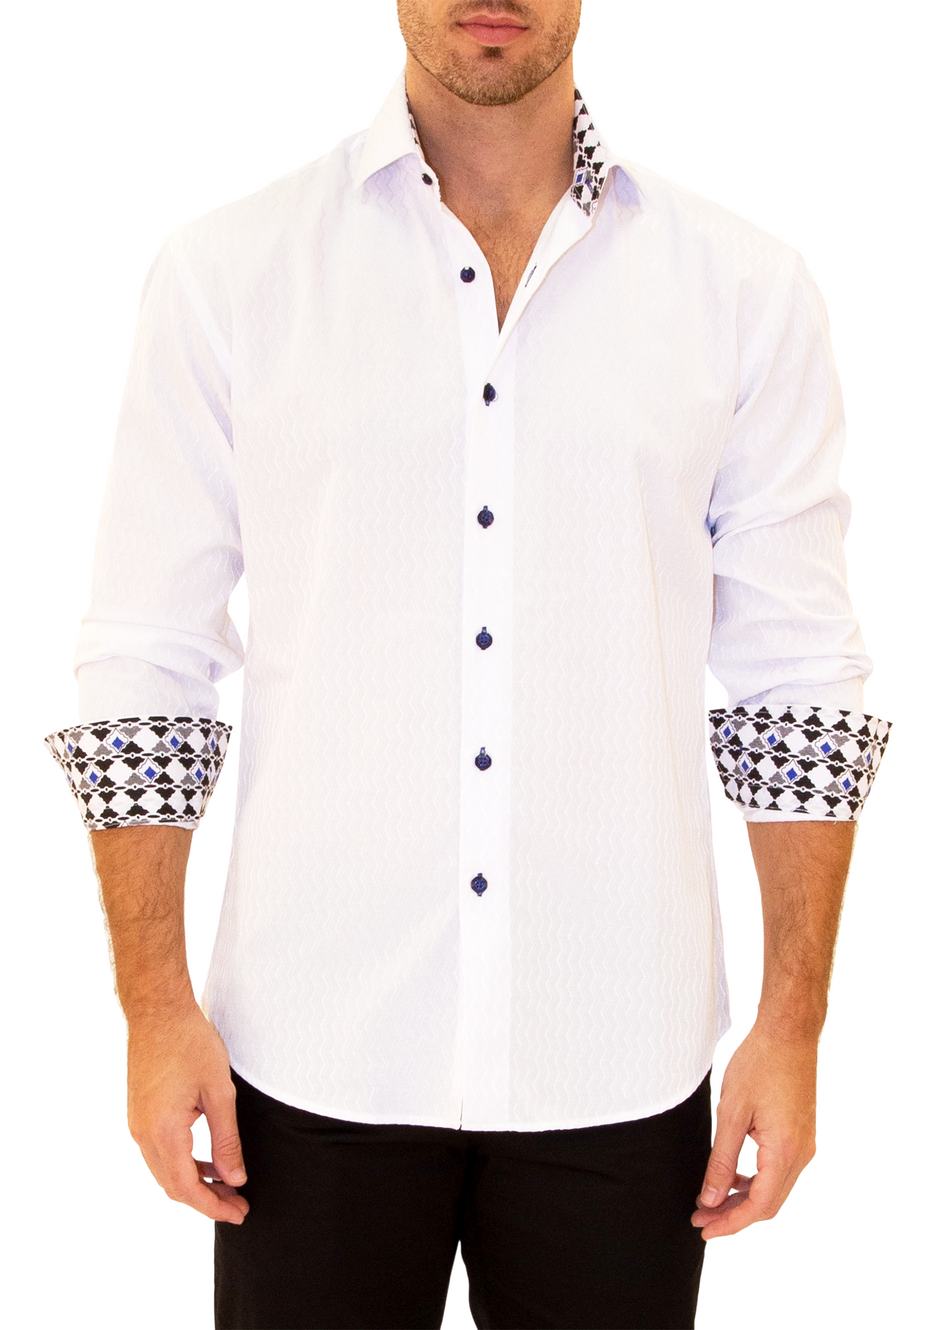 Zig-Zag Texture Solid White Button Up Men's Long Sleeve Dress Shirt